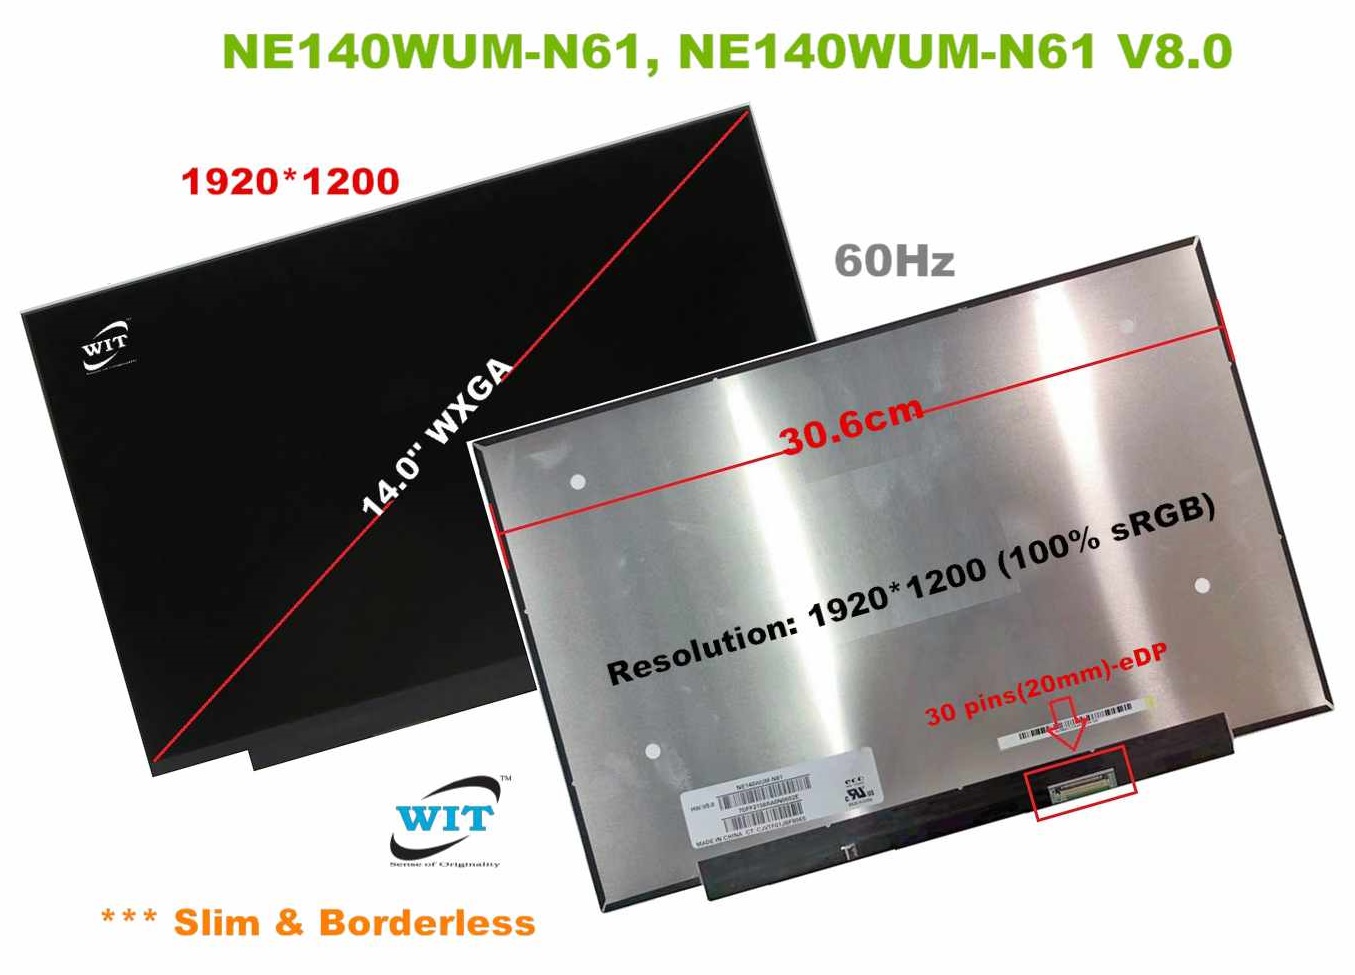 14.0-inch(Slim  Borderless), Width: 30.6cm, Video Tip: 30 pins(20mm)-eDP,  Resolution:1920*1200 (100% sRGB), Frequency: 60Hz, LED display panel,  Model: NE140WUM-N61, NE140WUM-N61 V8.0 WIT Computers